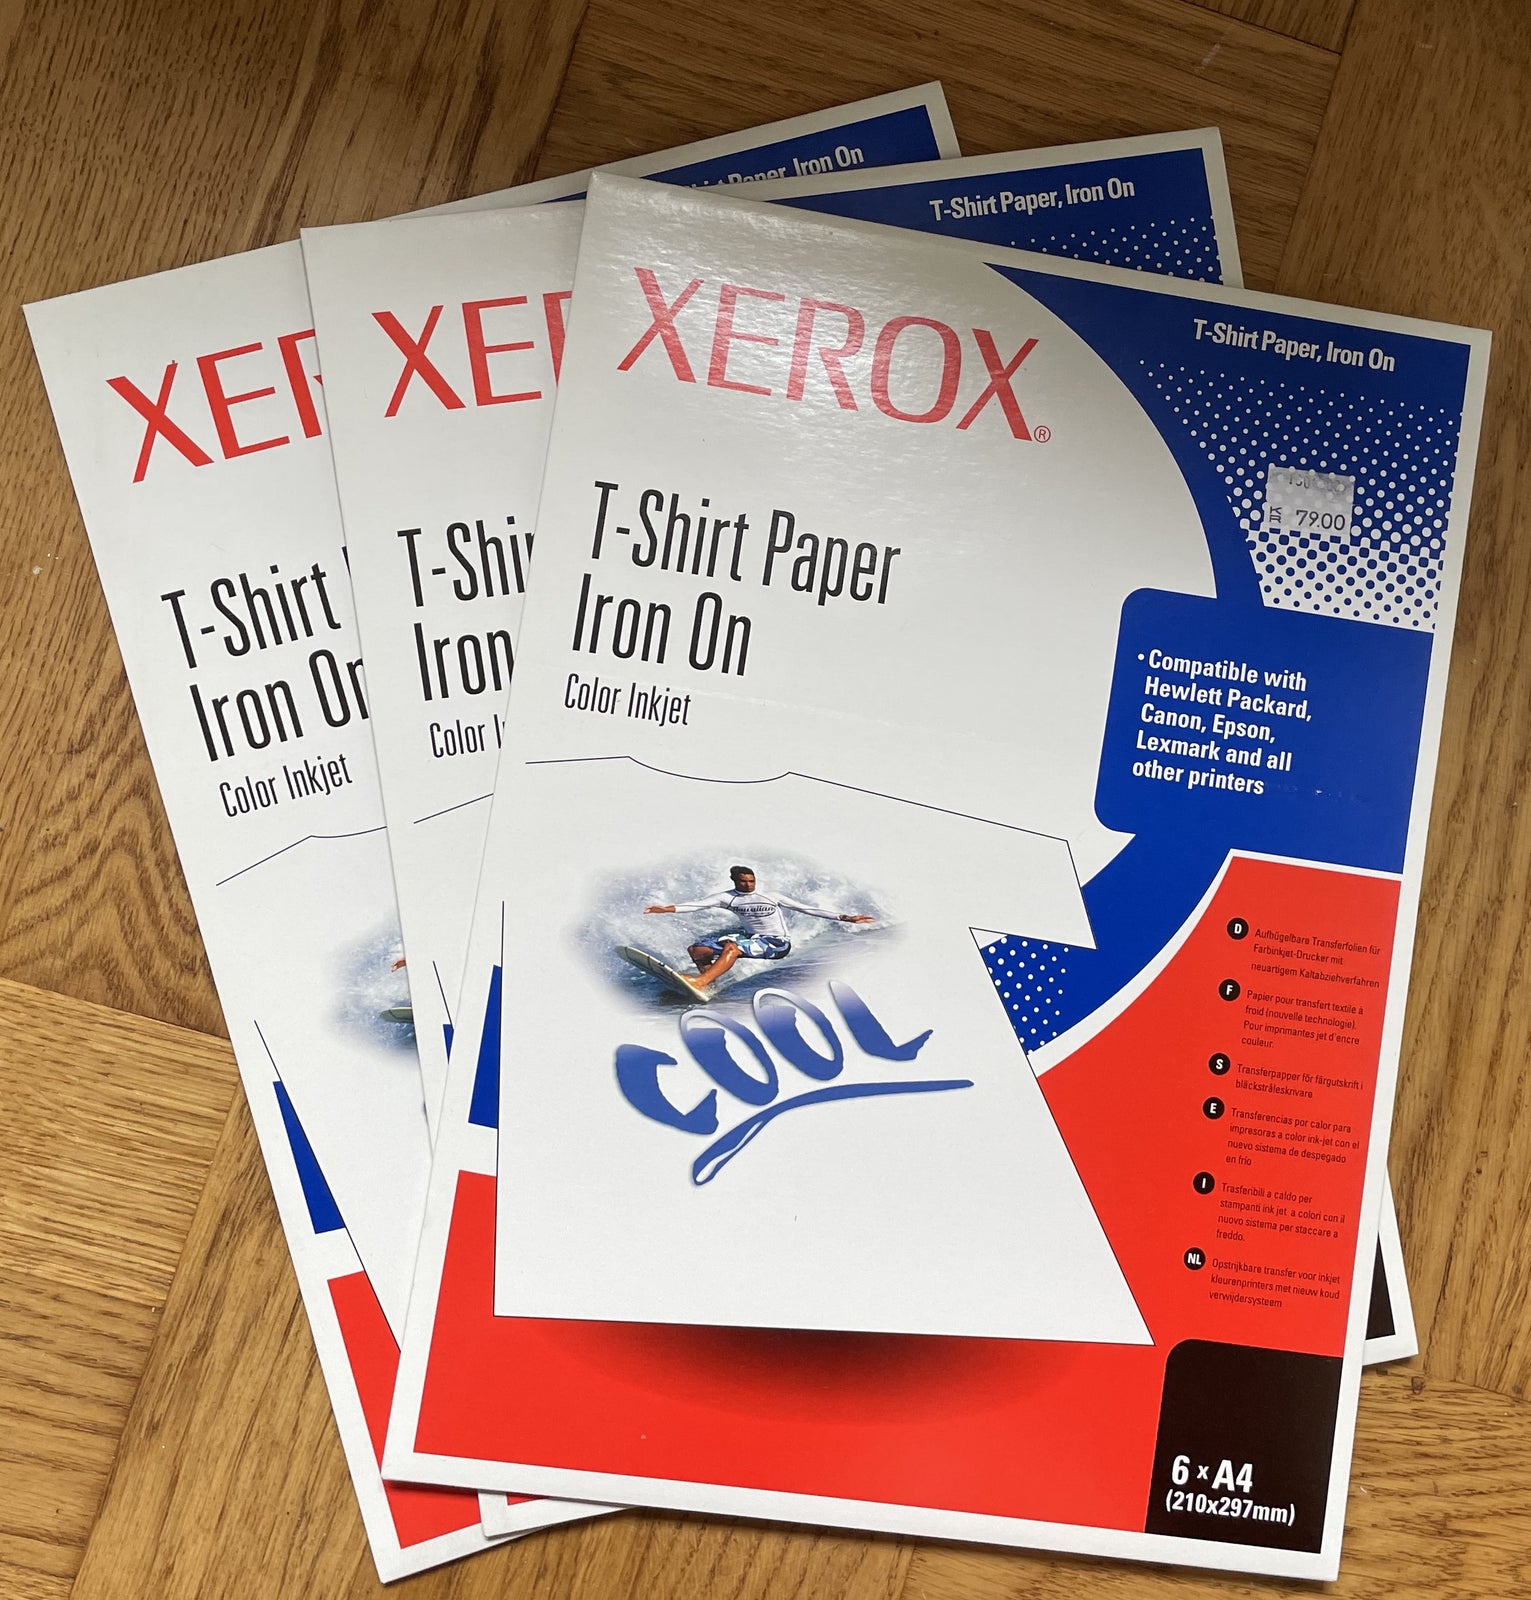 T-shirt paper iron on, Xerox, T-shirt